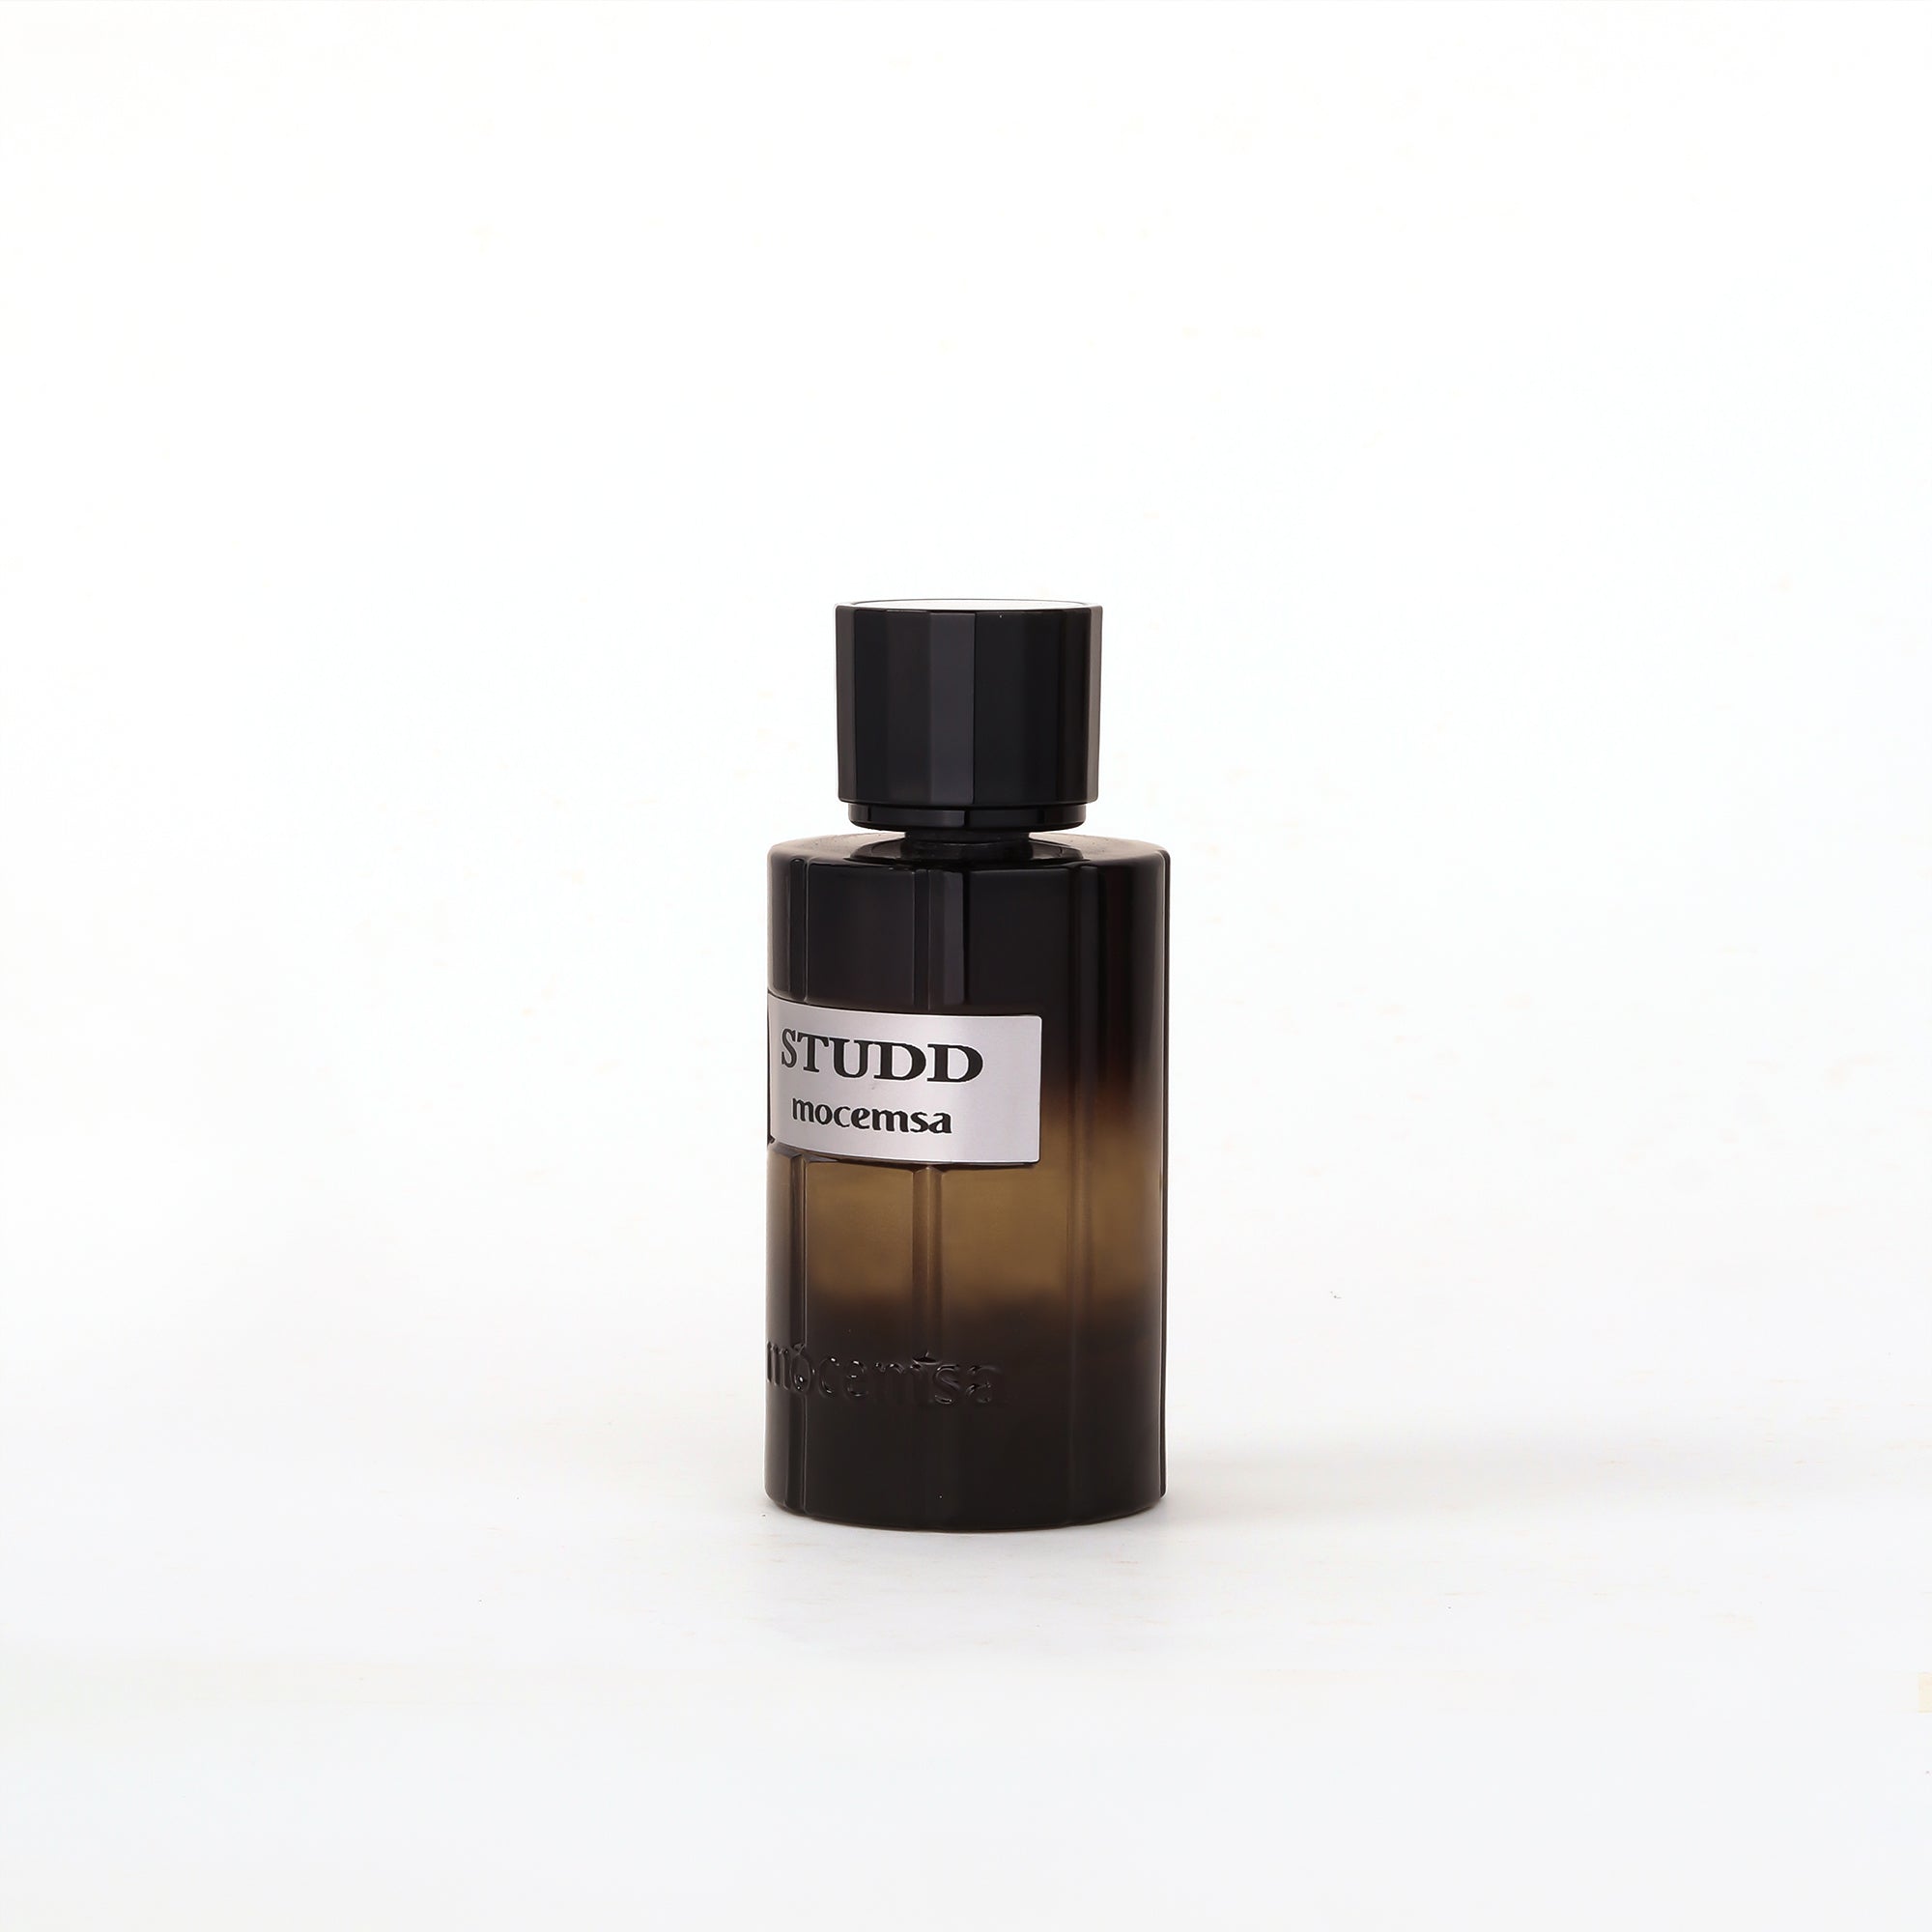 10 Best Perfume Gift Sets | Edgars Mag